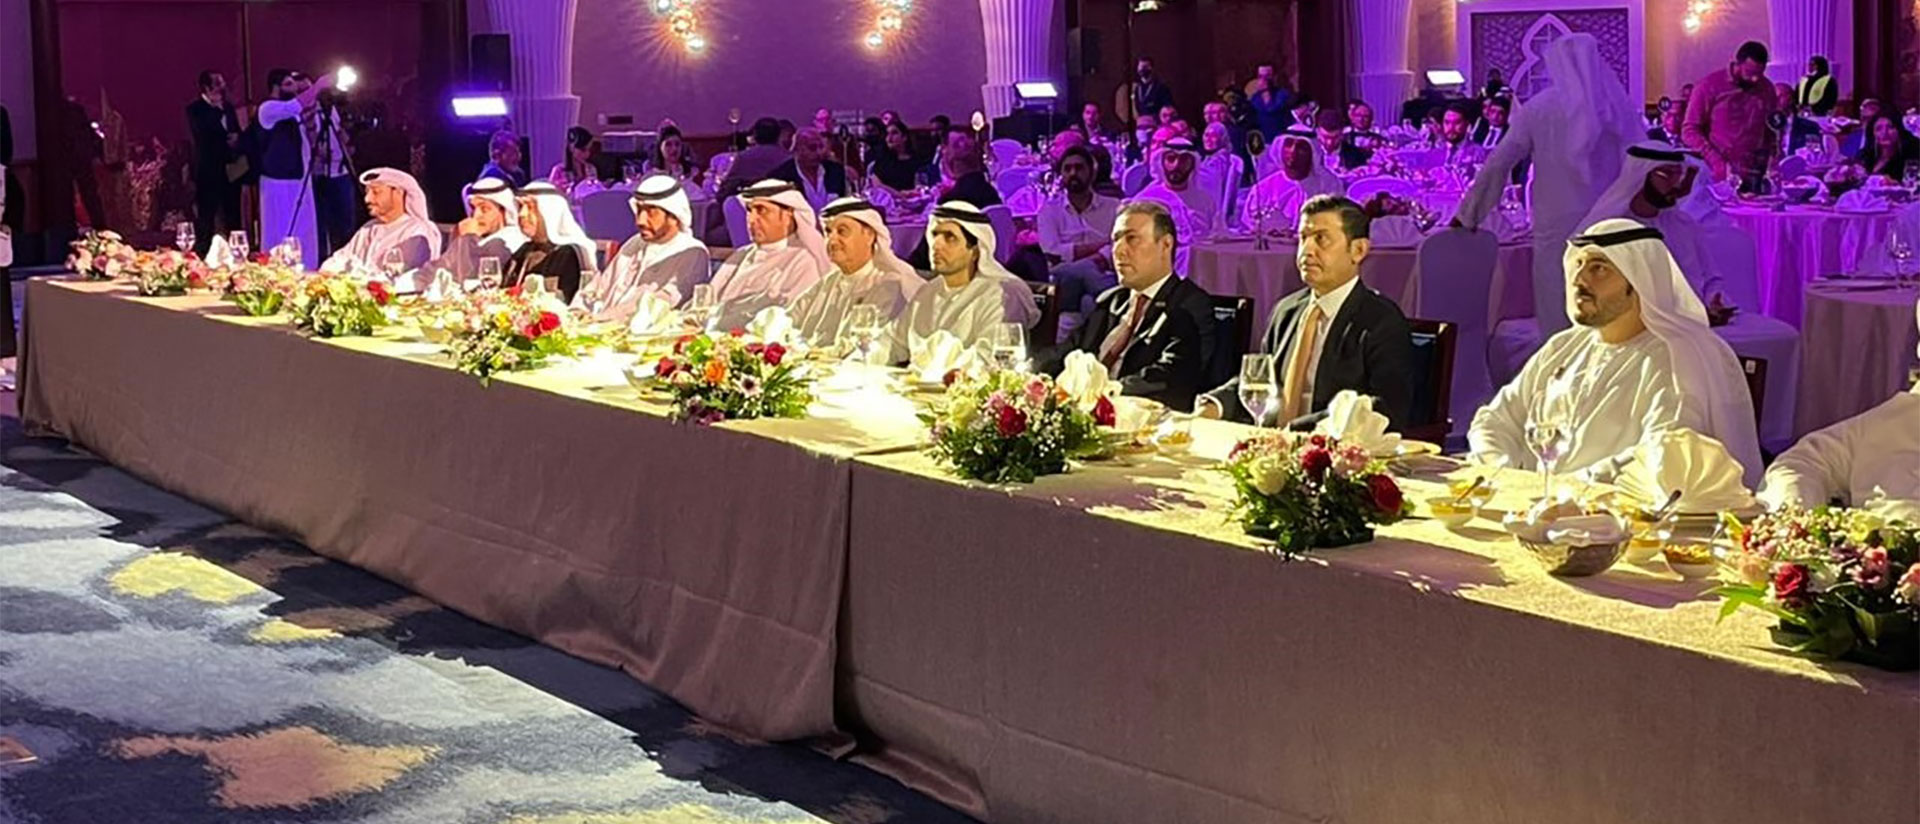 Al Handal Group receives Honor during “Al Saada” Initiative Ceremony